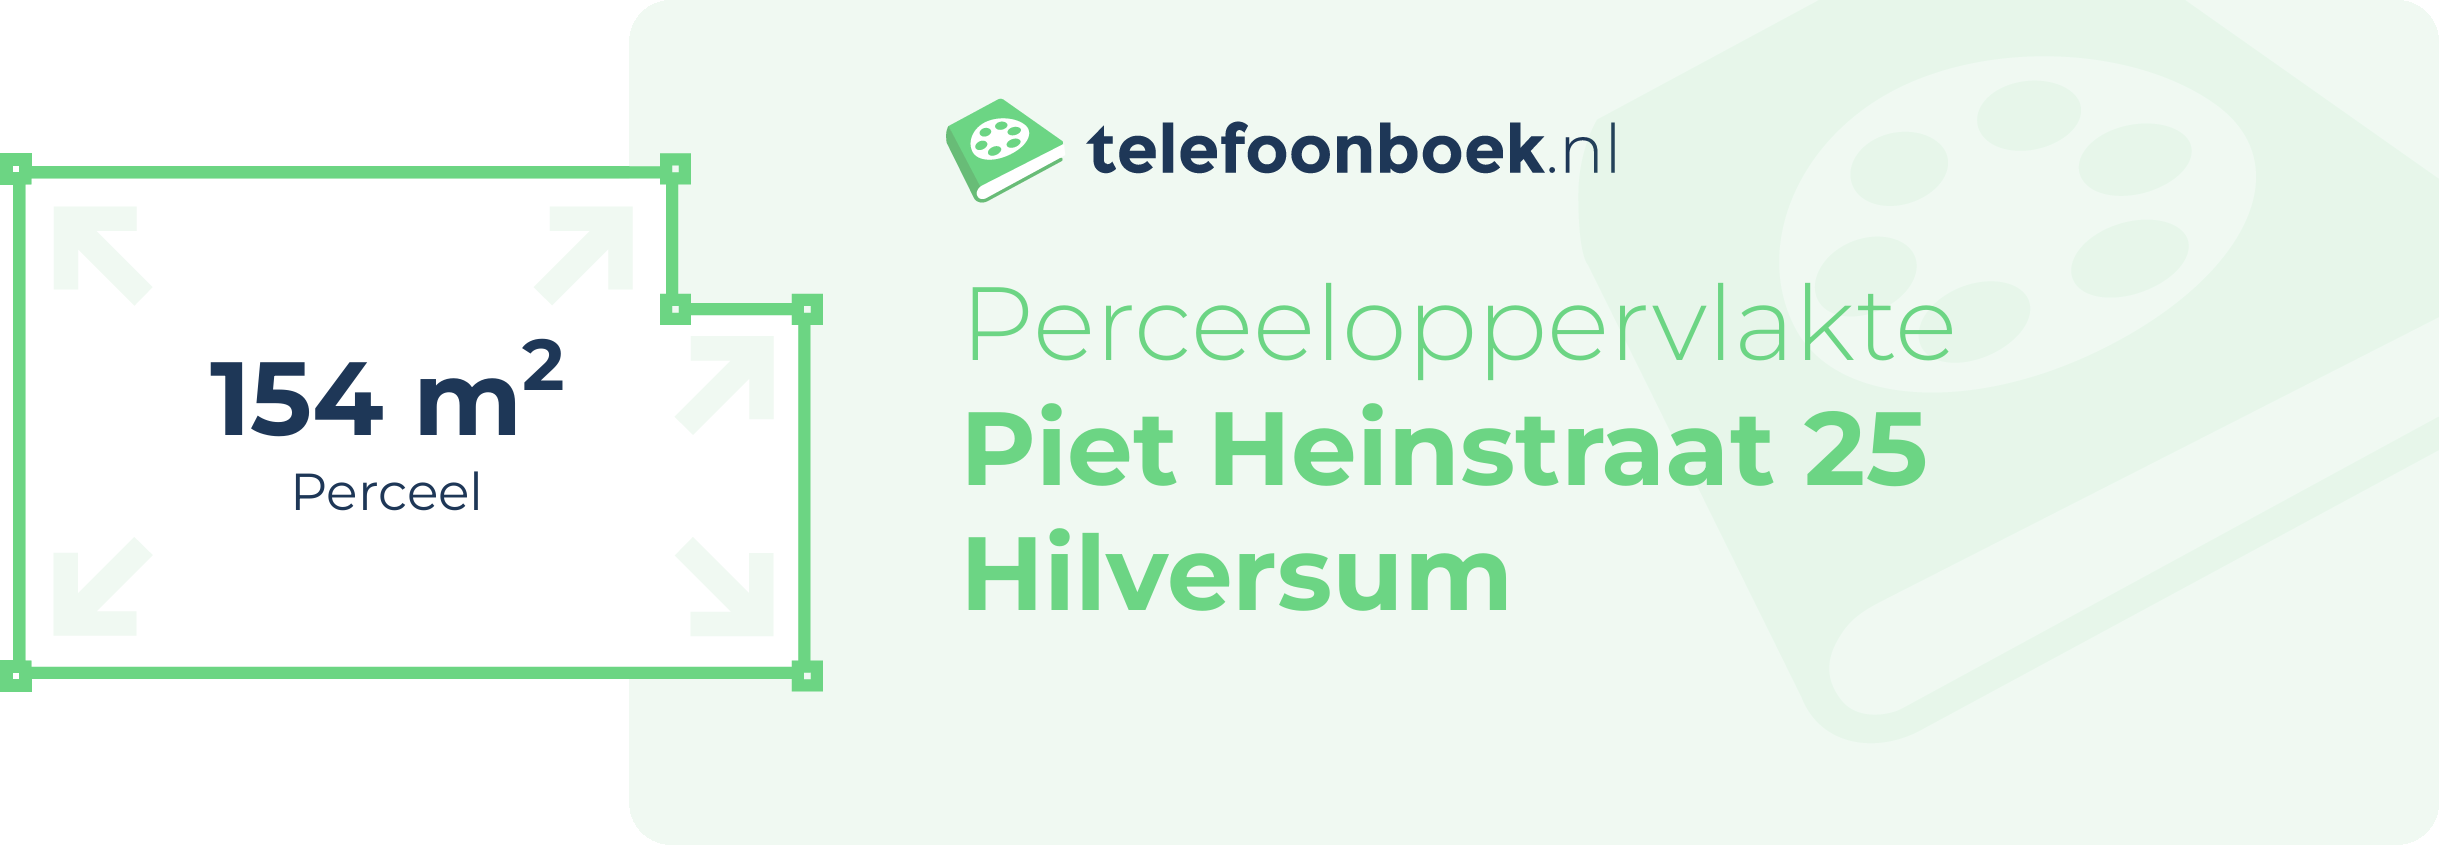 Perceeloppervlakte Piet Heinstraat 25 Hilversum